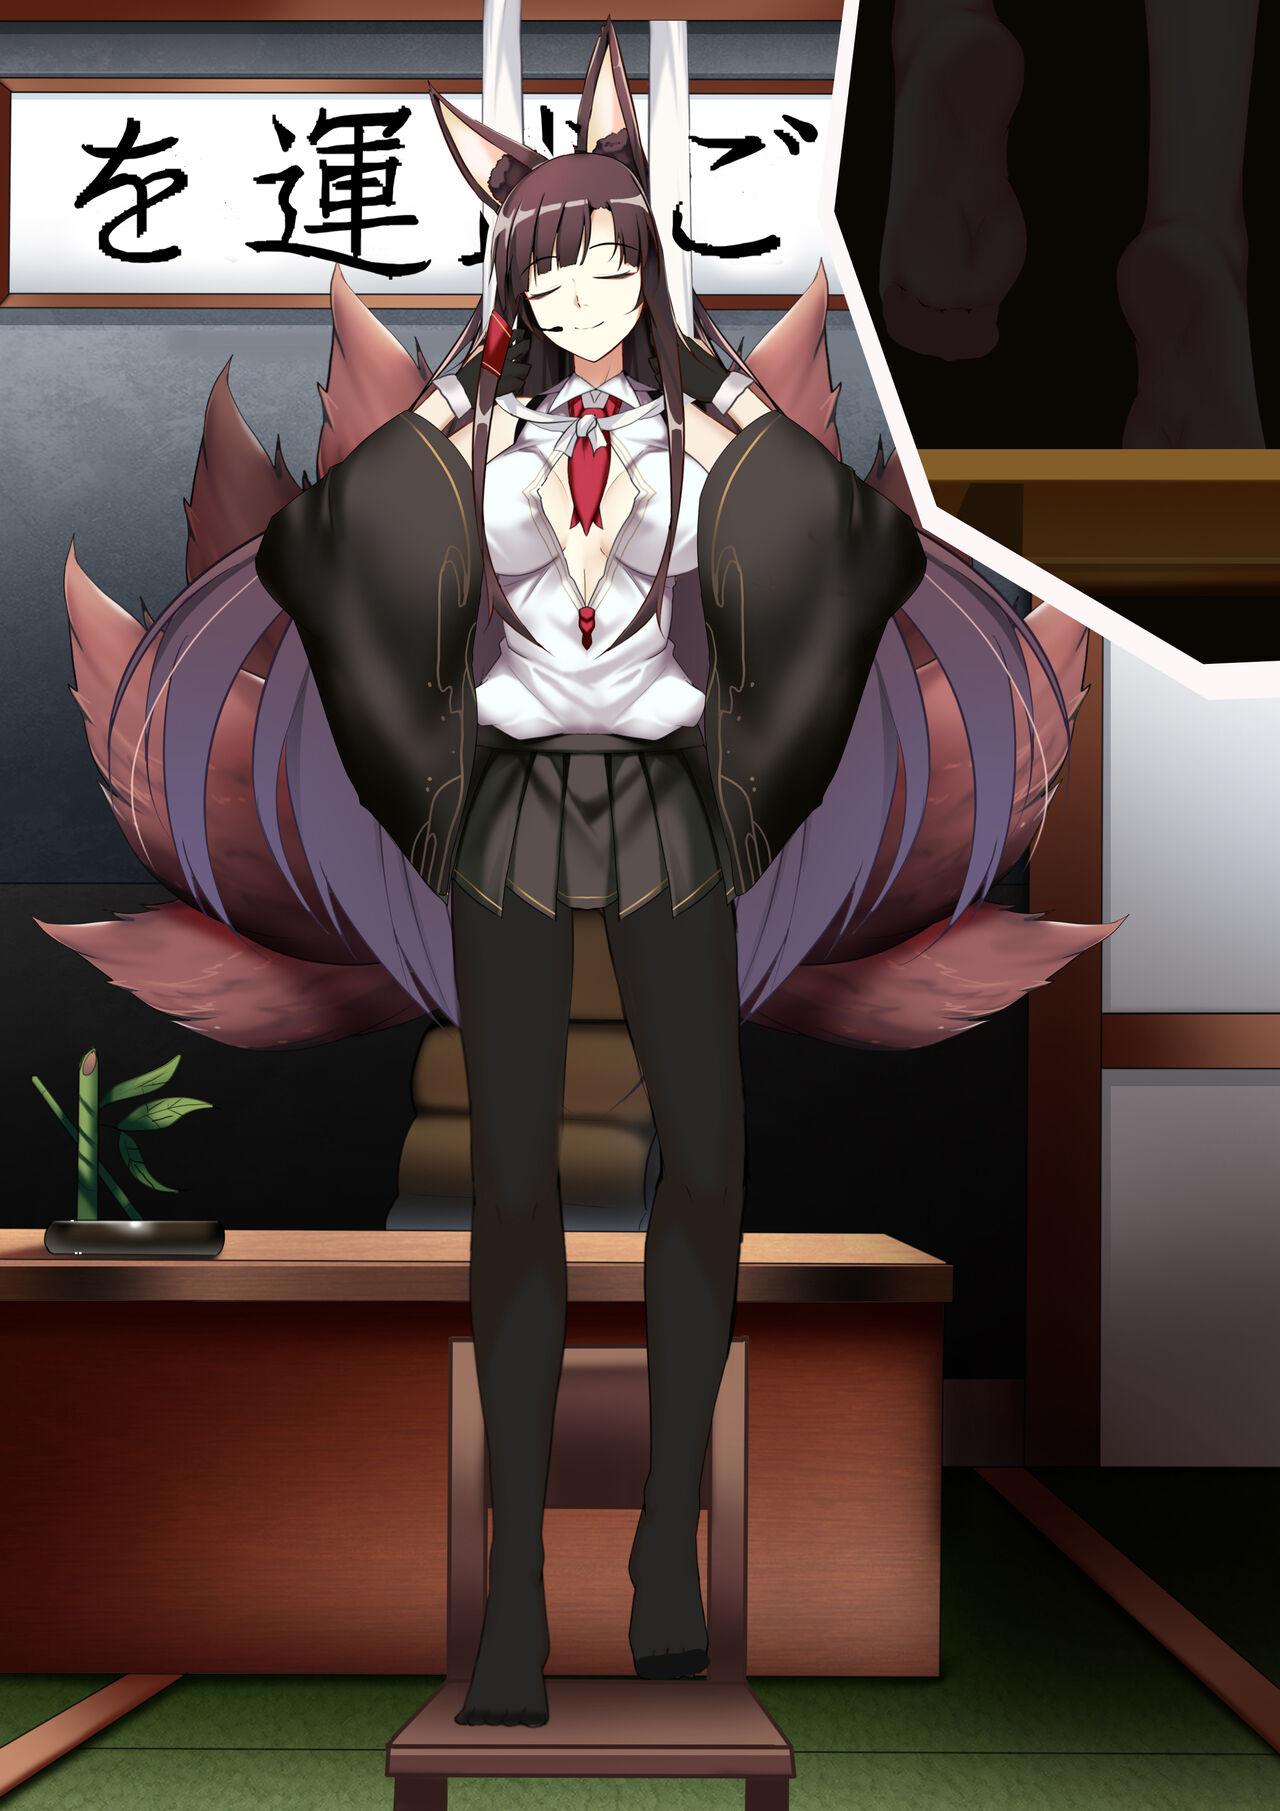 Akagi hanged herself in her office 29